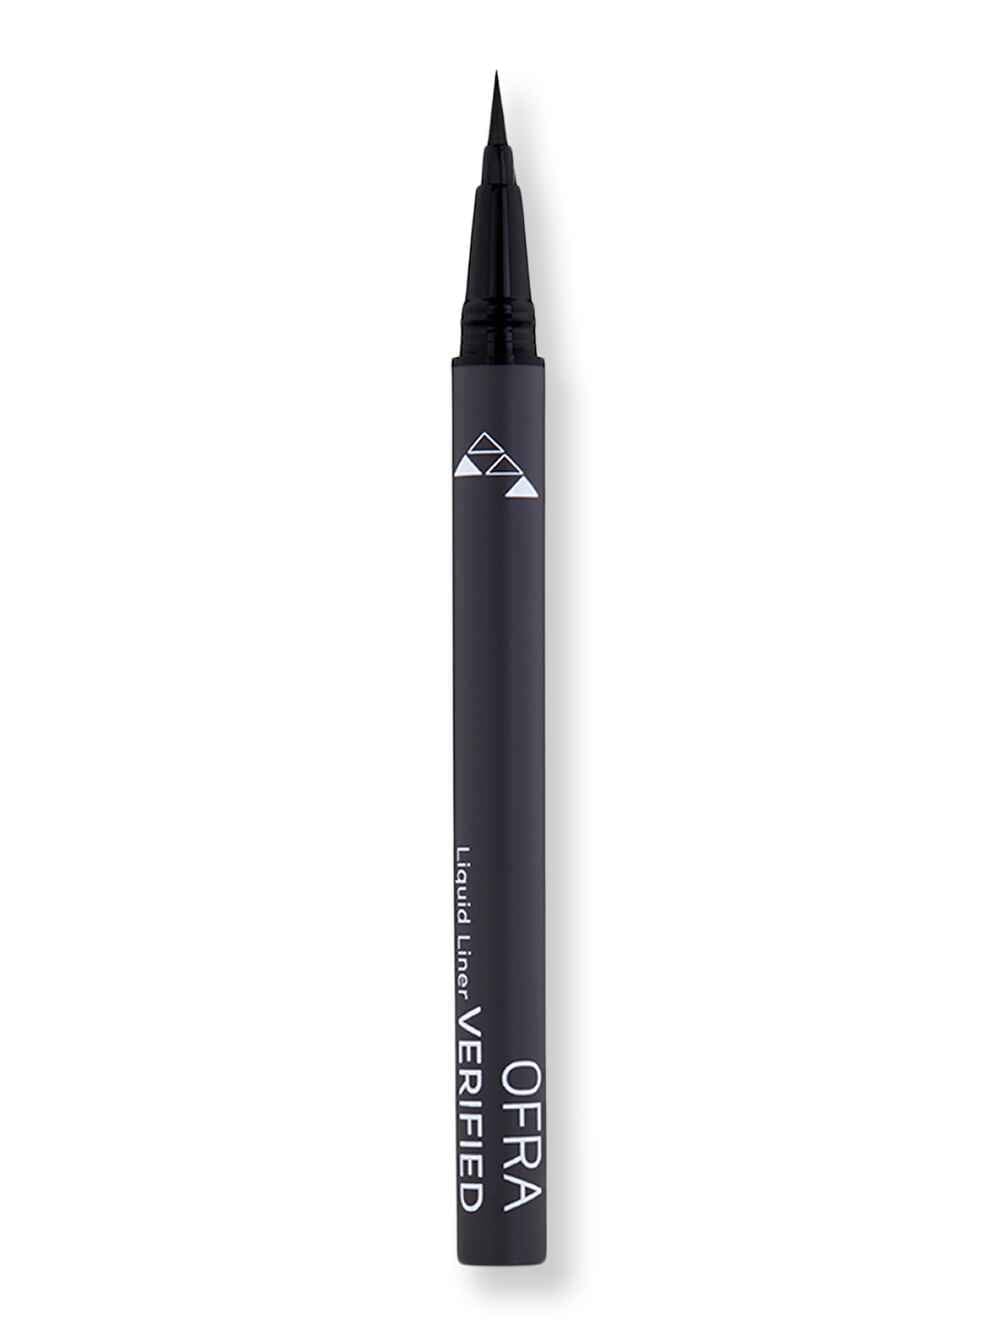 OFRA Cosmetics OFRA Cosmetics Verified Liquid Eyeliner Pen Black .04 oz1 g Eyeliners 